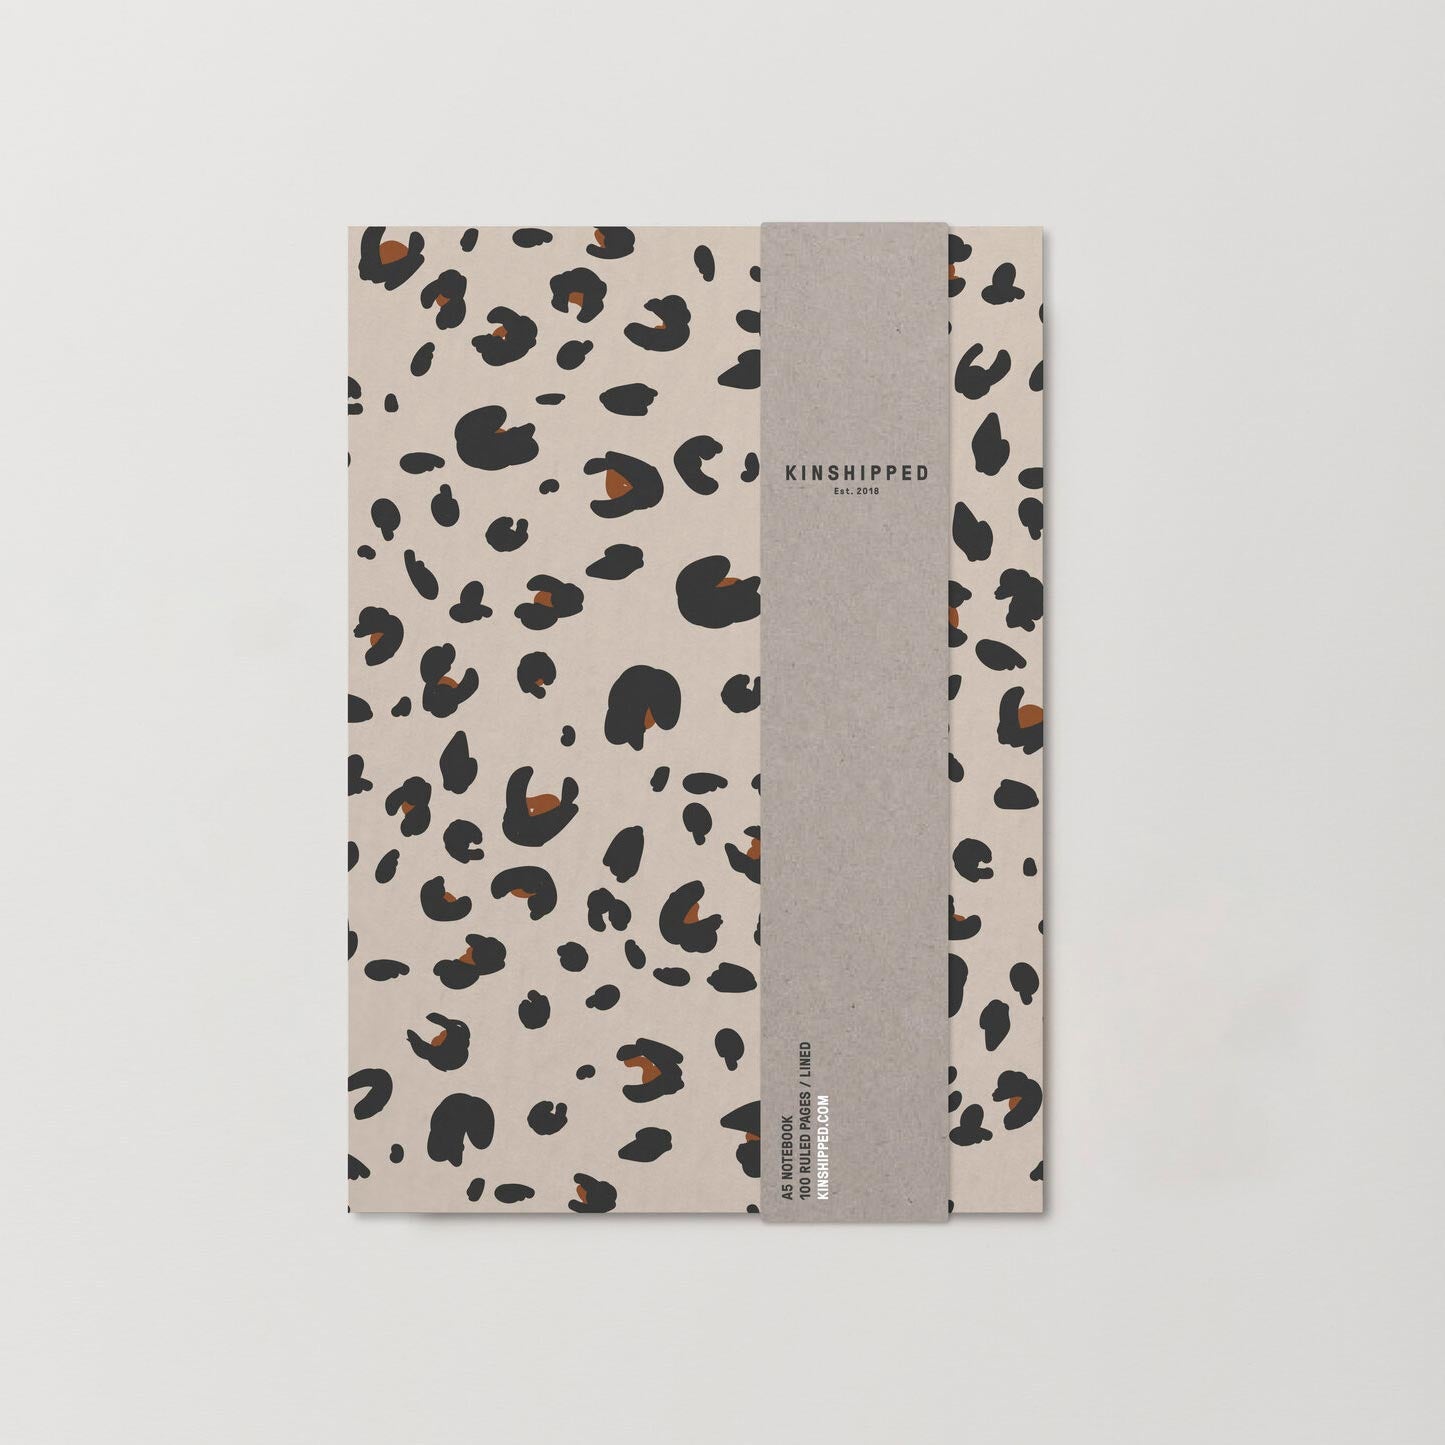 Beige leopard notebook